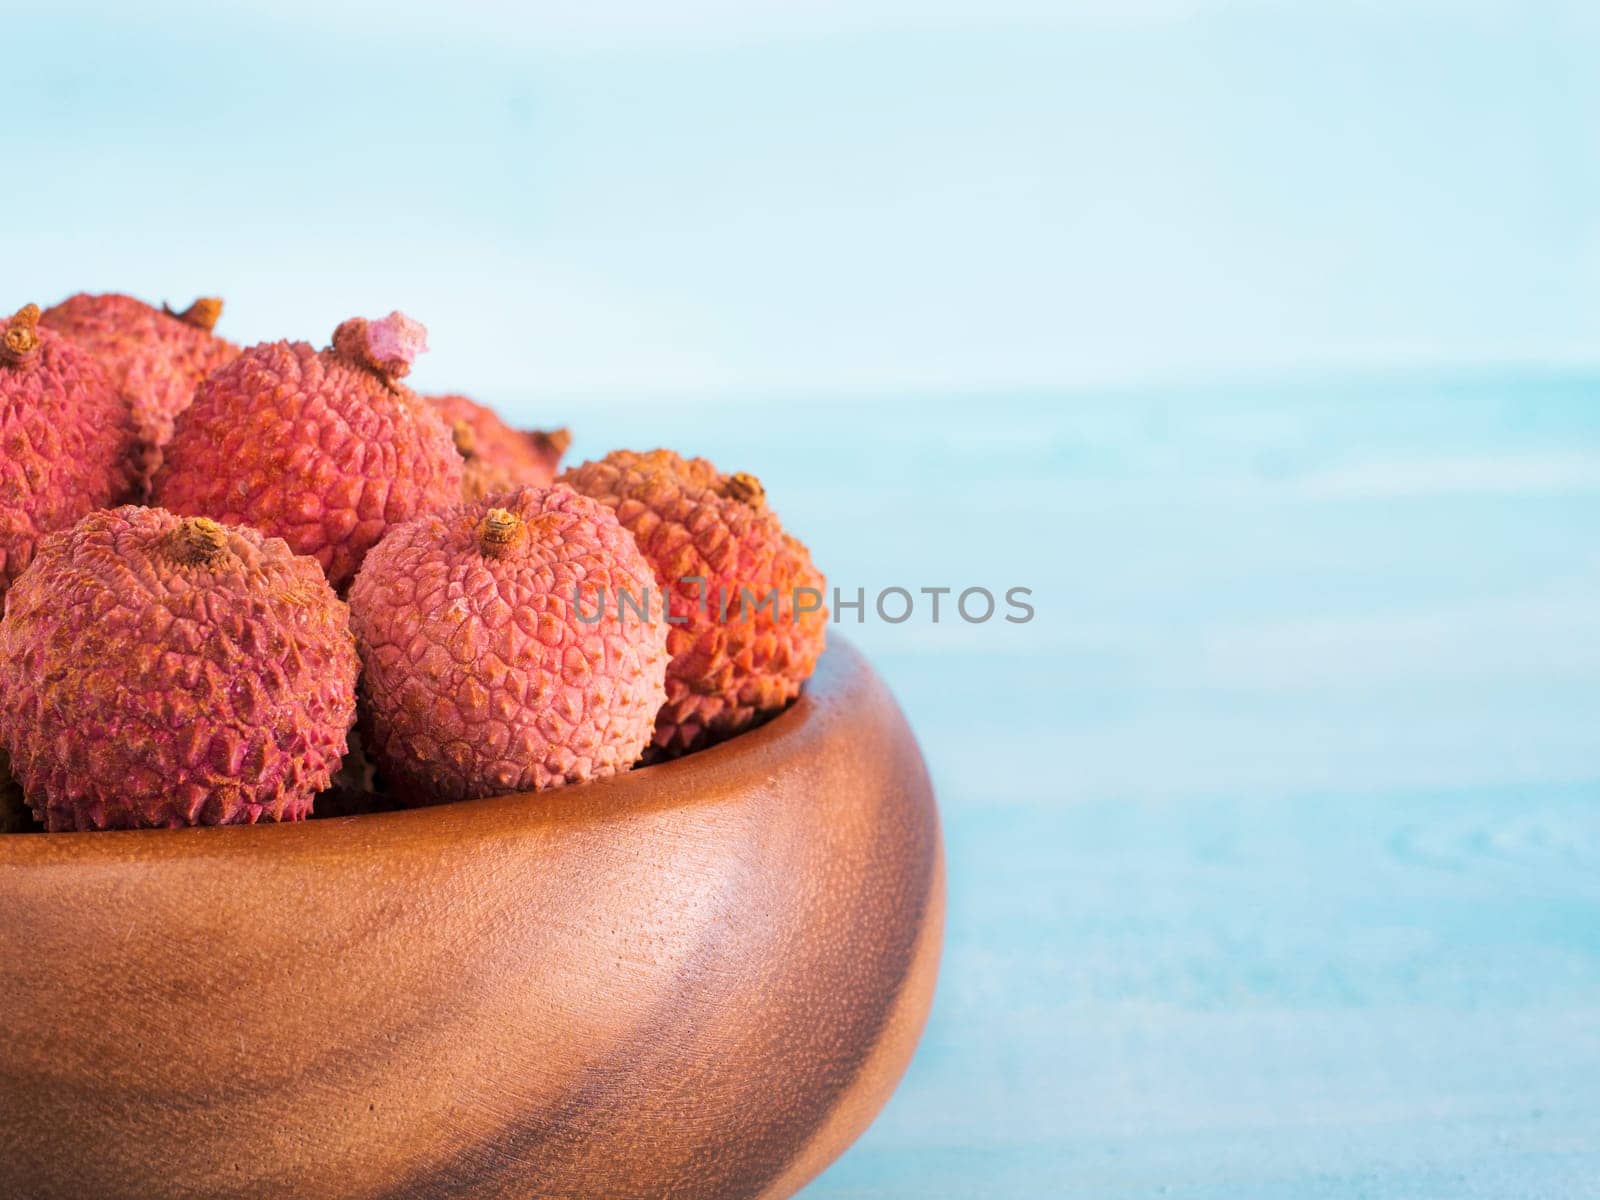 lichee fruit close up by fascinadora